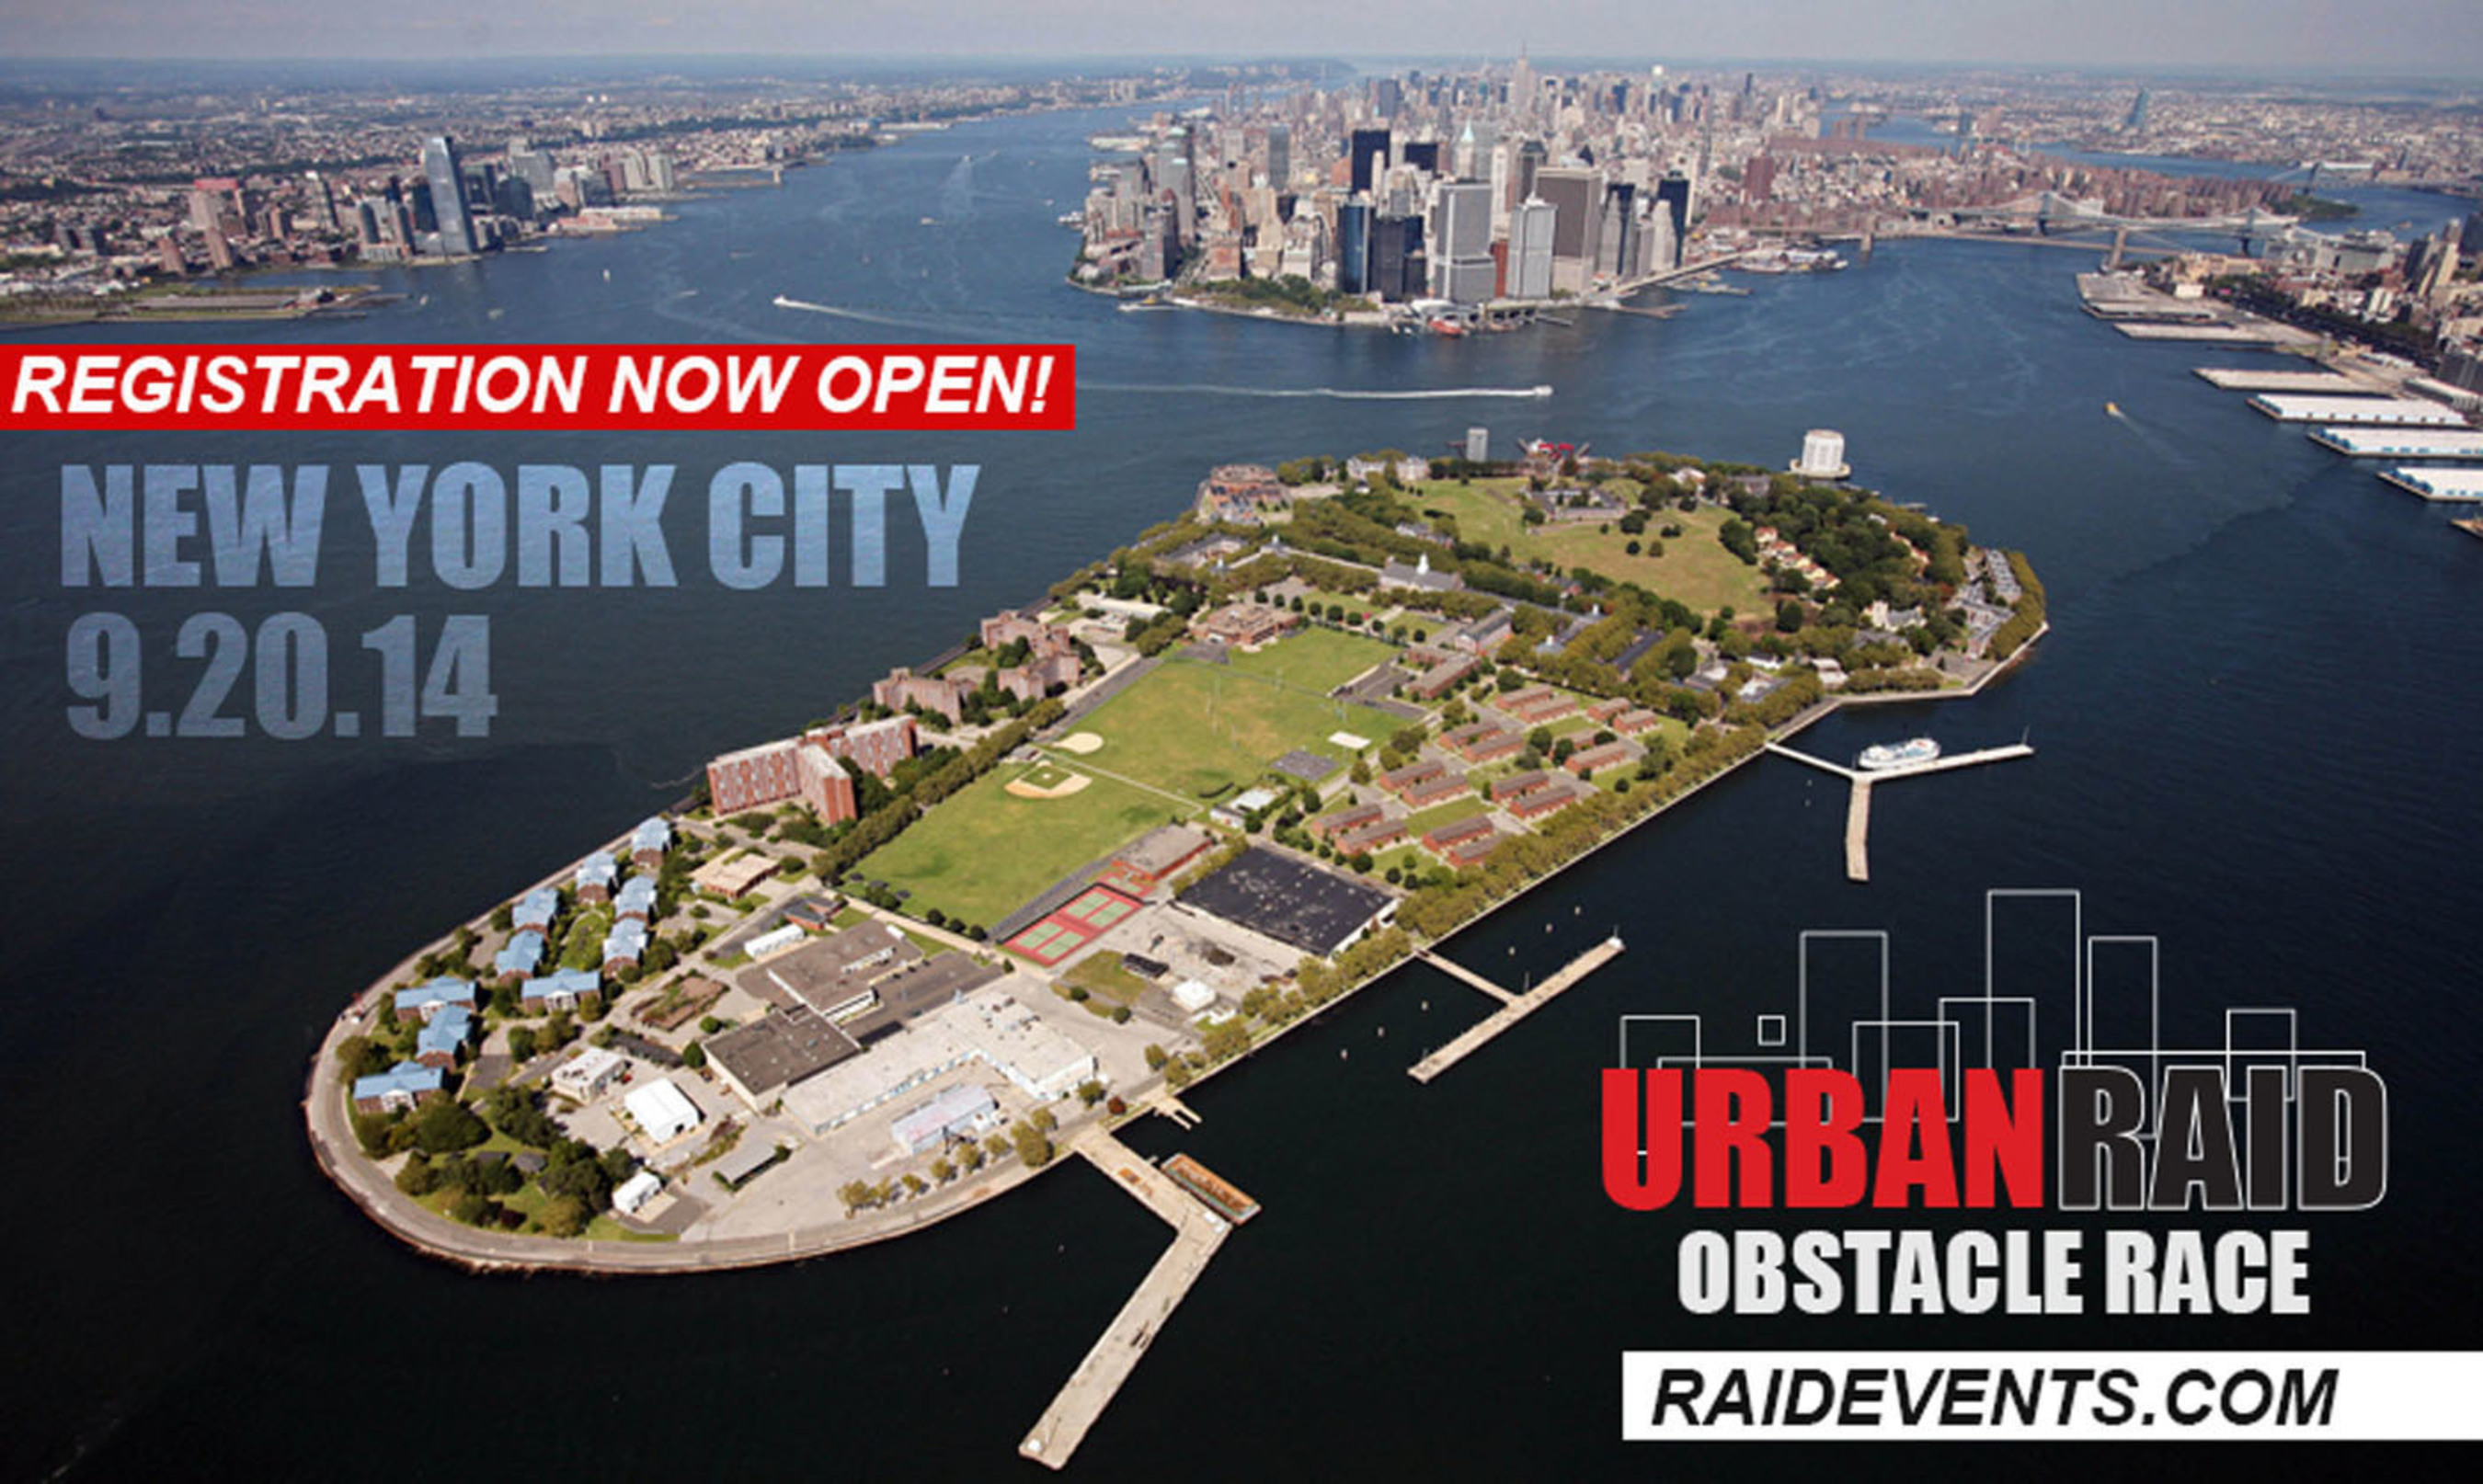 Urban RAID Obstacle Race announced for NYC on 9.20.2014! (PRNewsFoto/RAID Events LLC) (PRNewsFoto/RAID Events LLC)